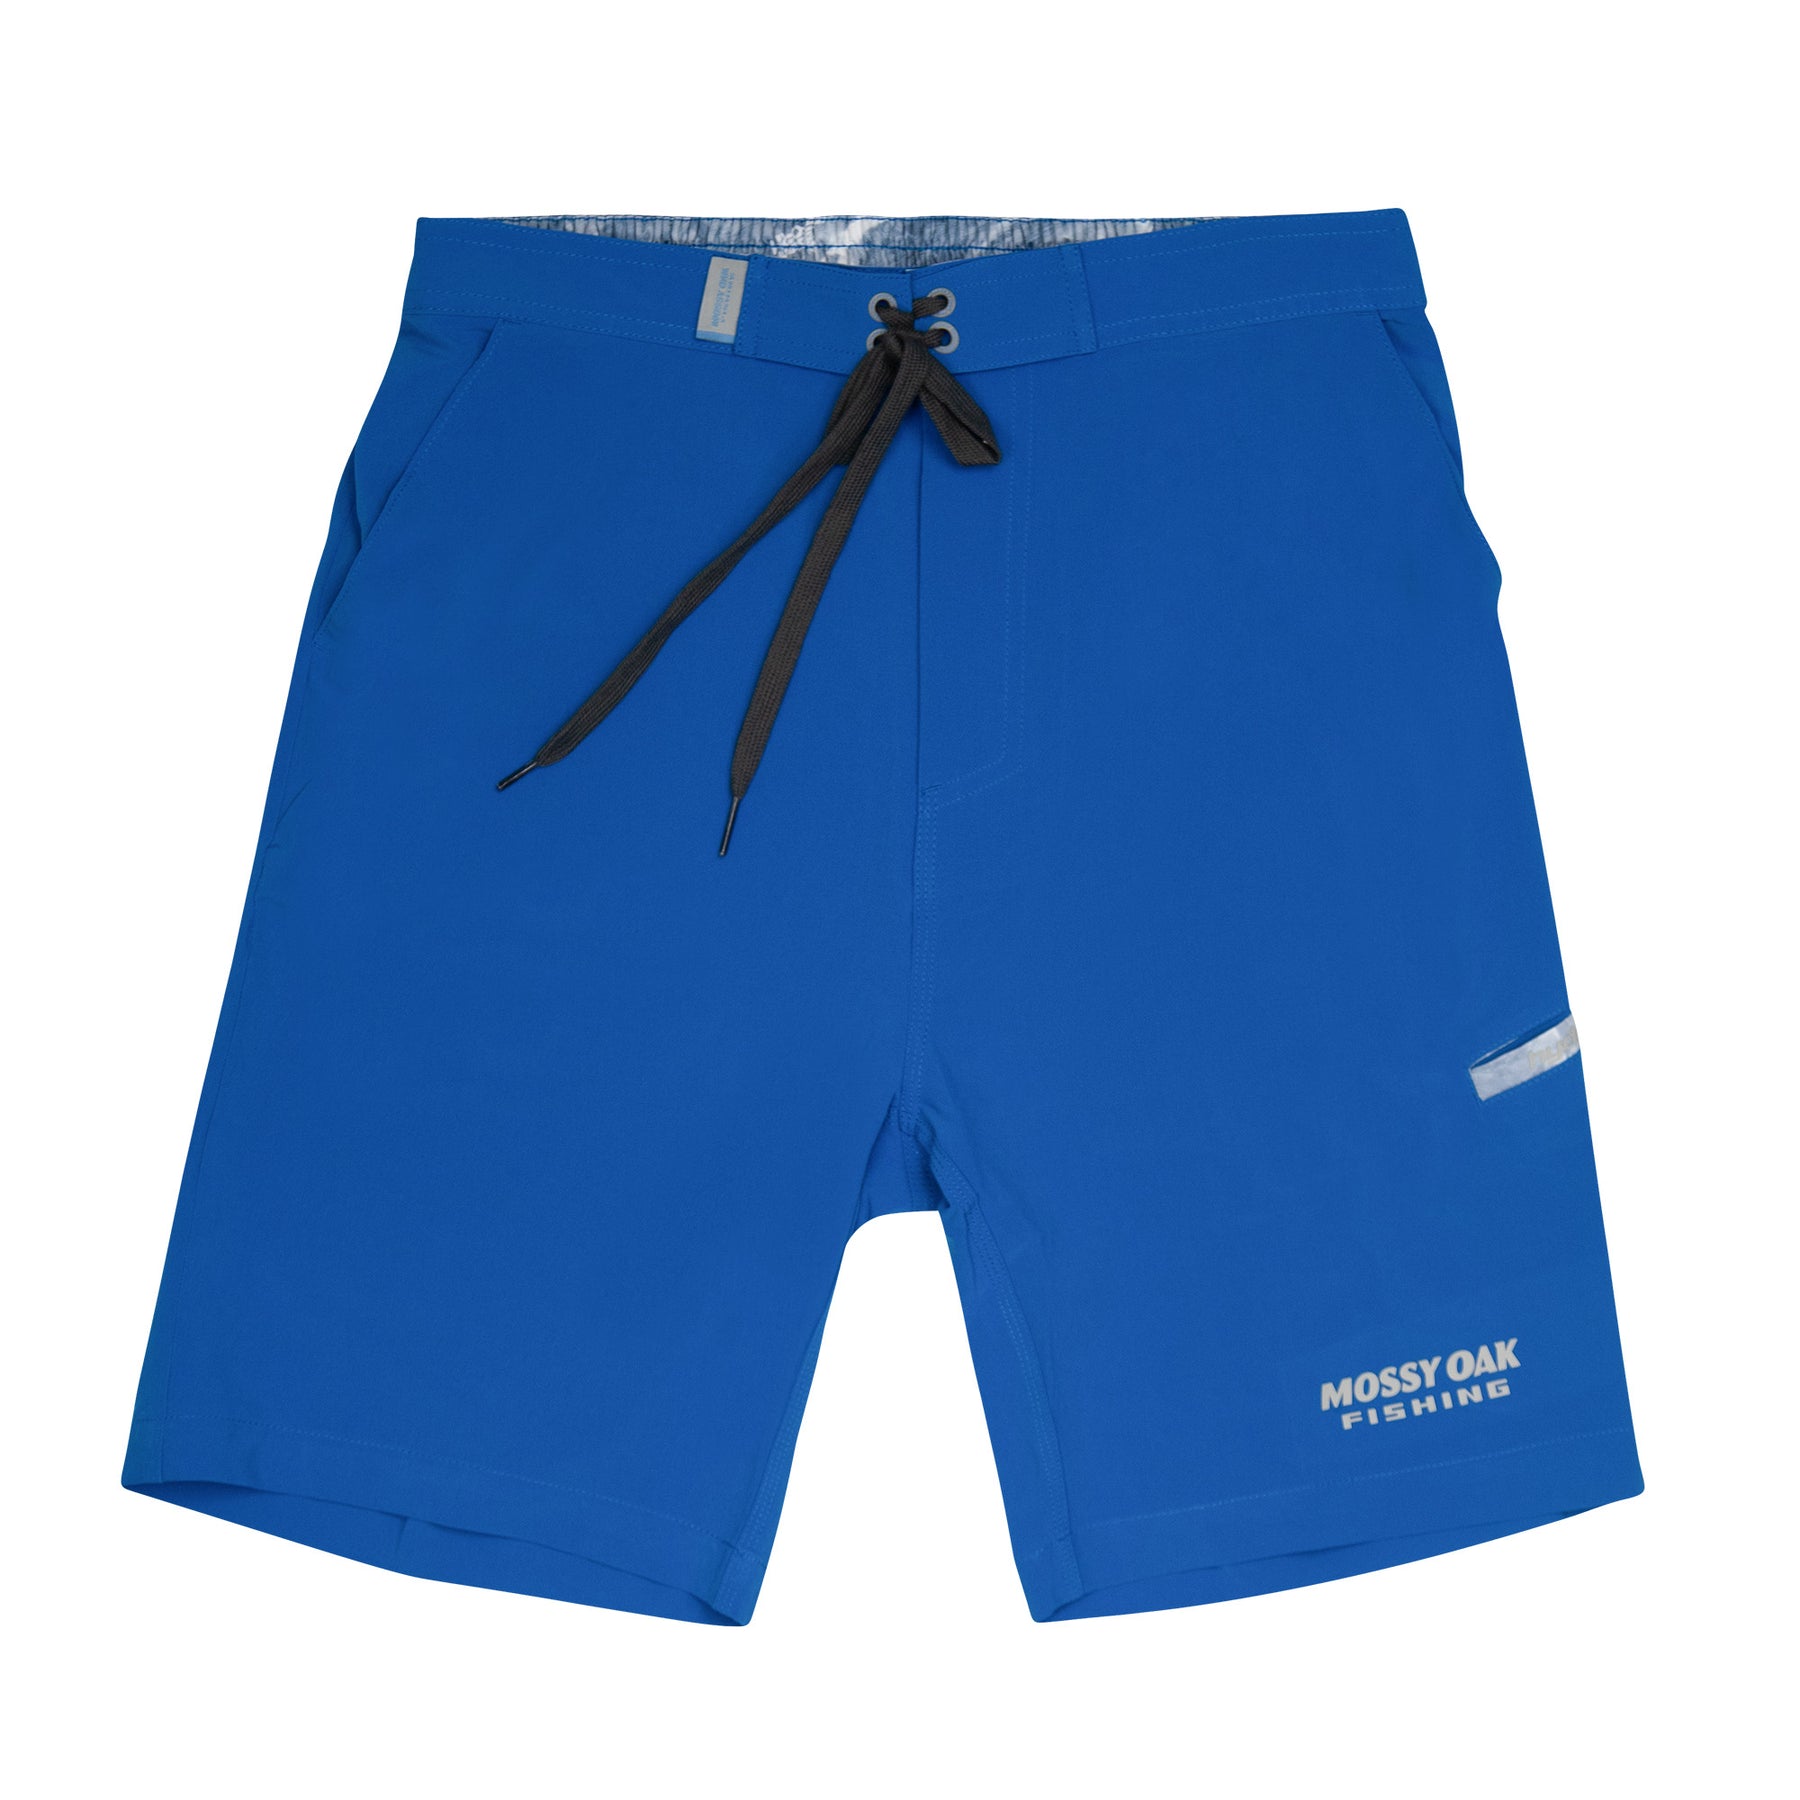 Guy Harvey womens active blue Bermuda fishing shorts, 38 waist